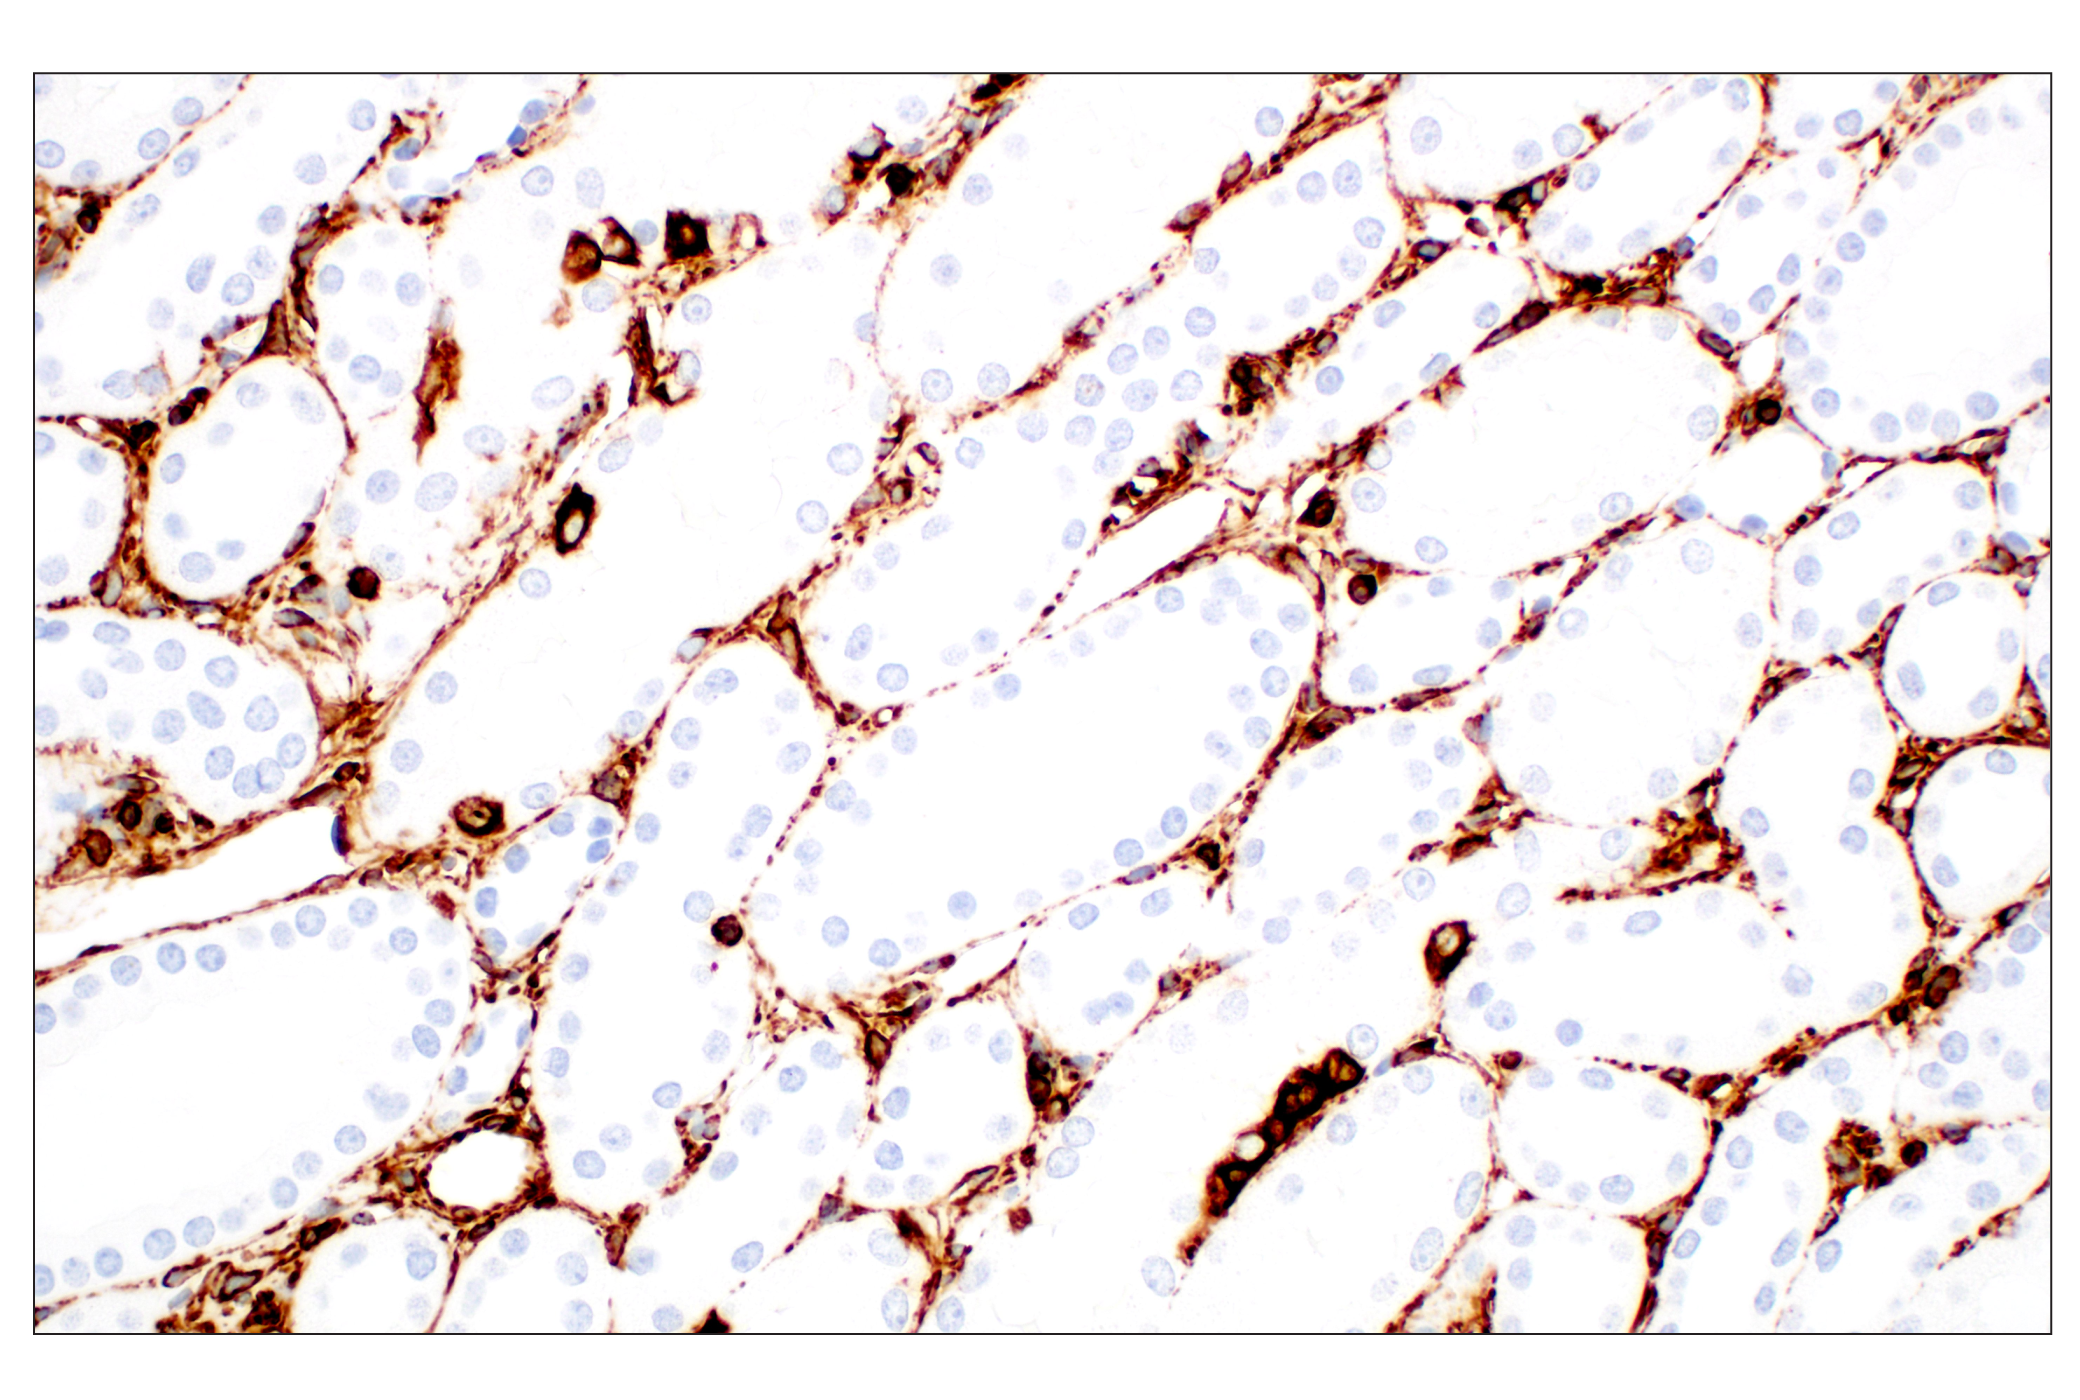  Image 54: Epithelial-Mesenchymal Transition (EMT) IF Antibody Sampler Kit